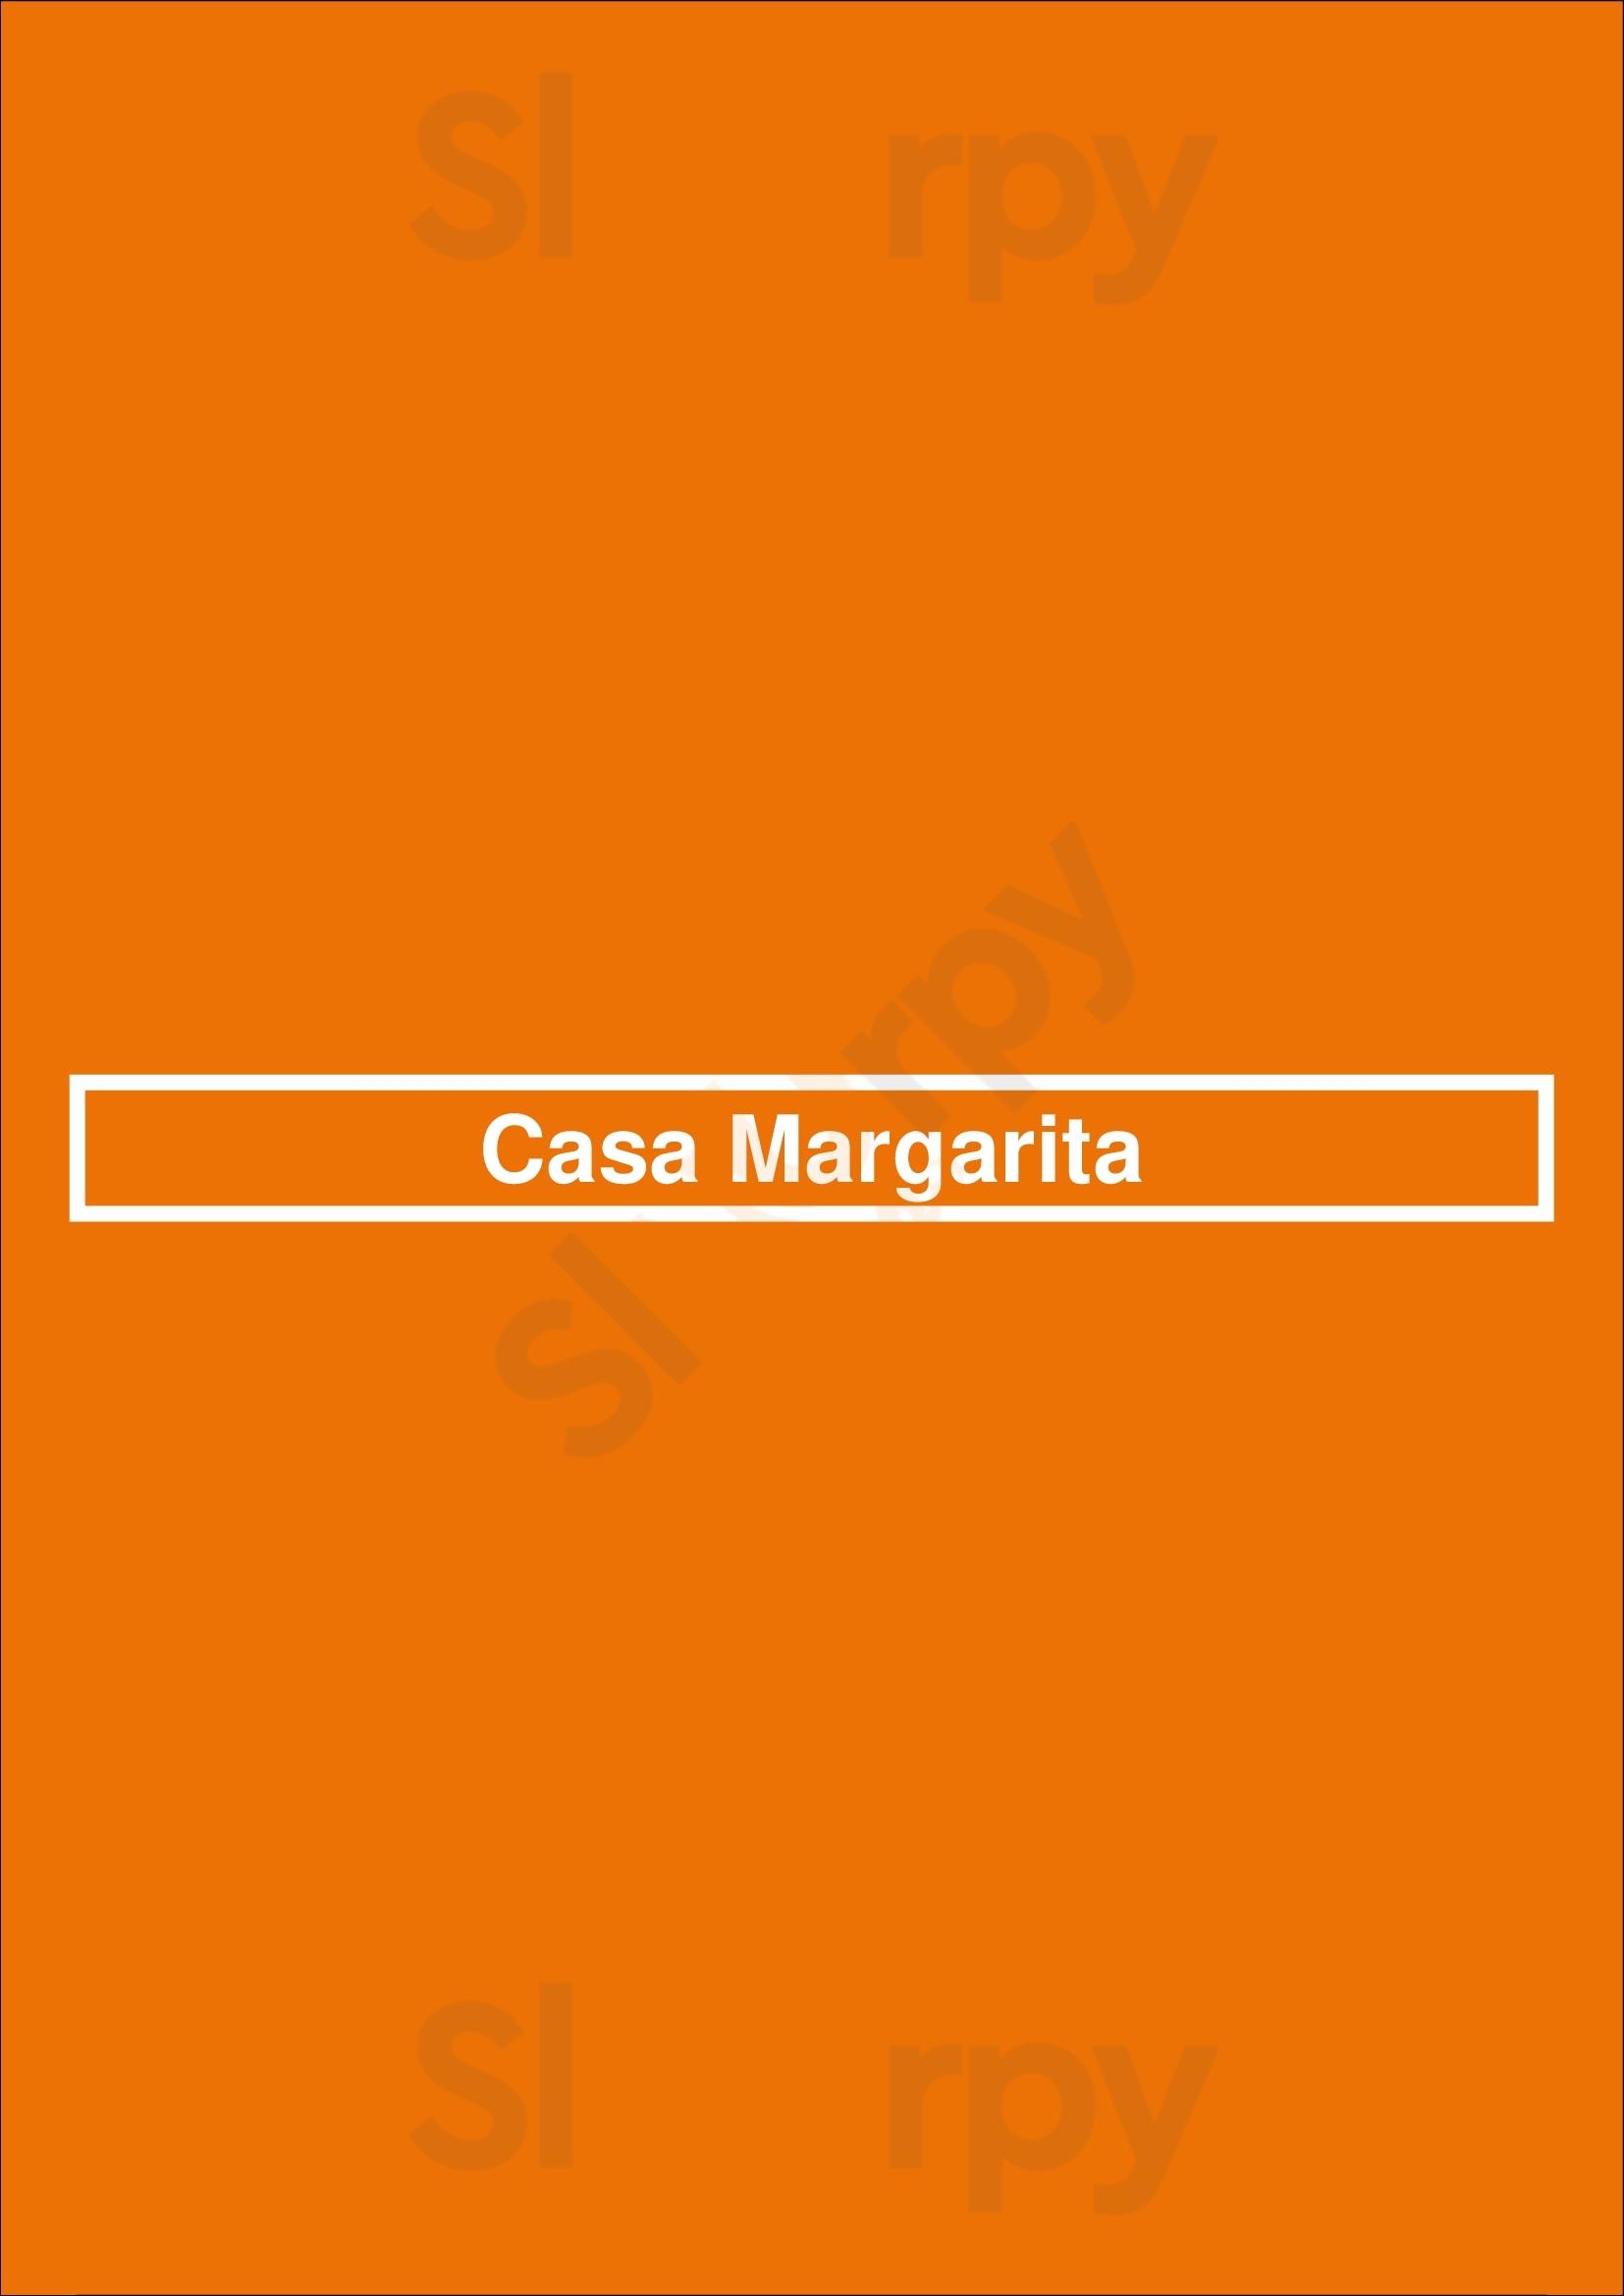 Casa Margarita Chicago Menu - 1